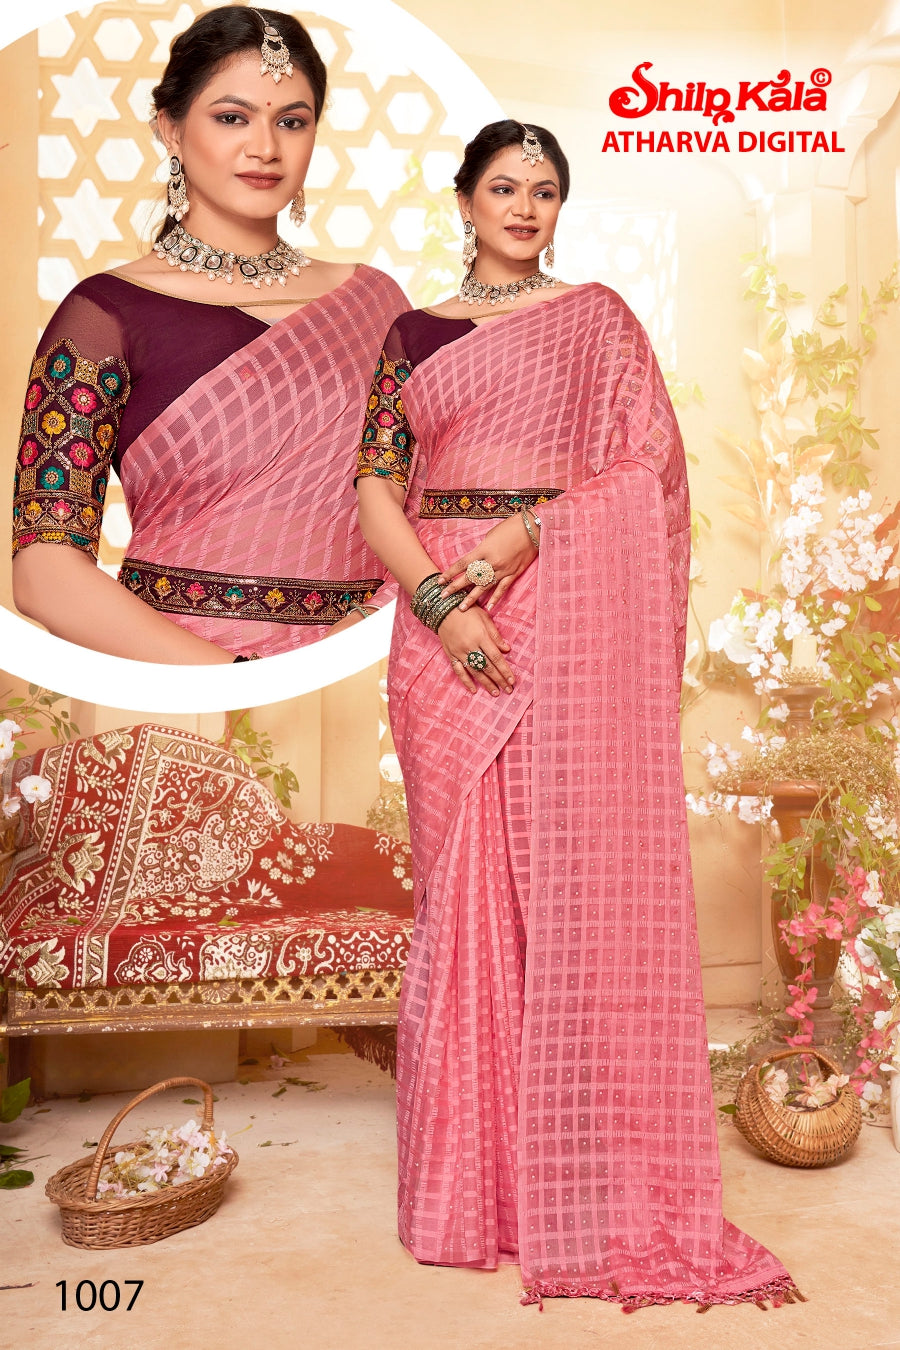 Atharva Shilpkala Fashions Premium Chiffon Saree with Belt and Contrast Matching